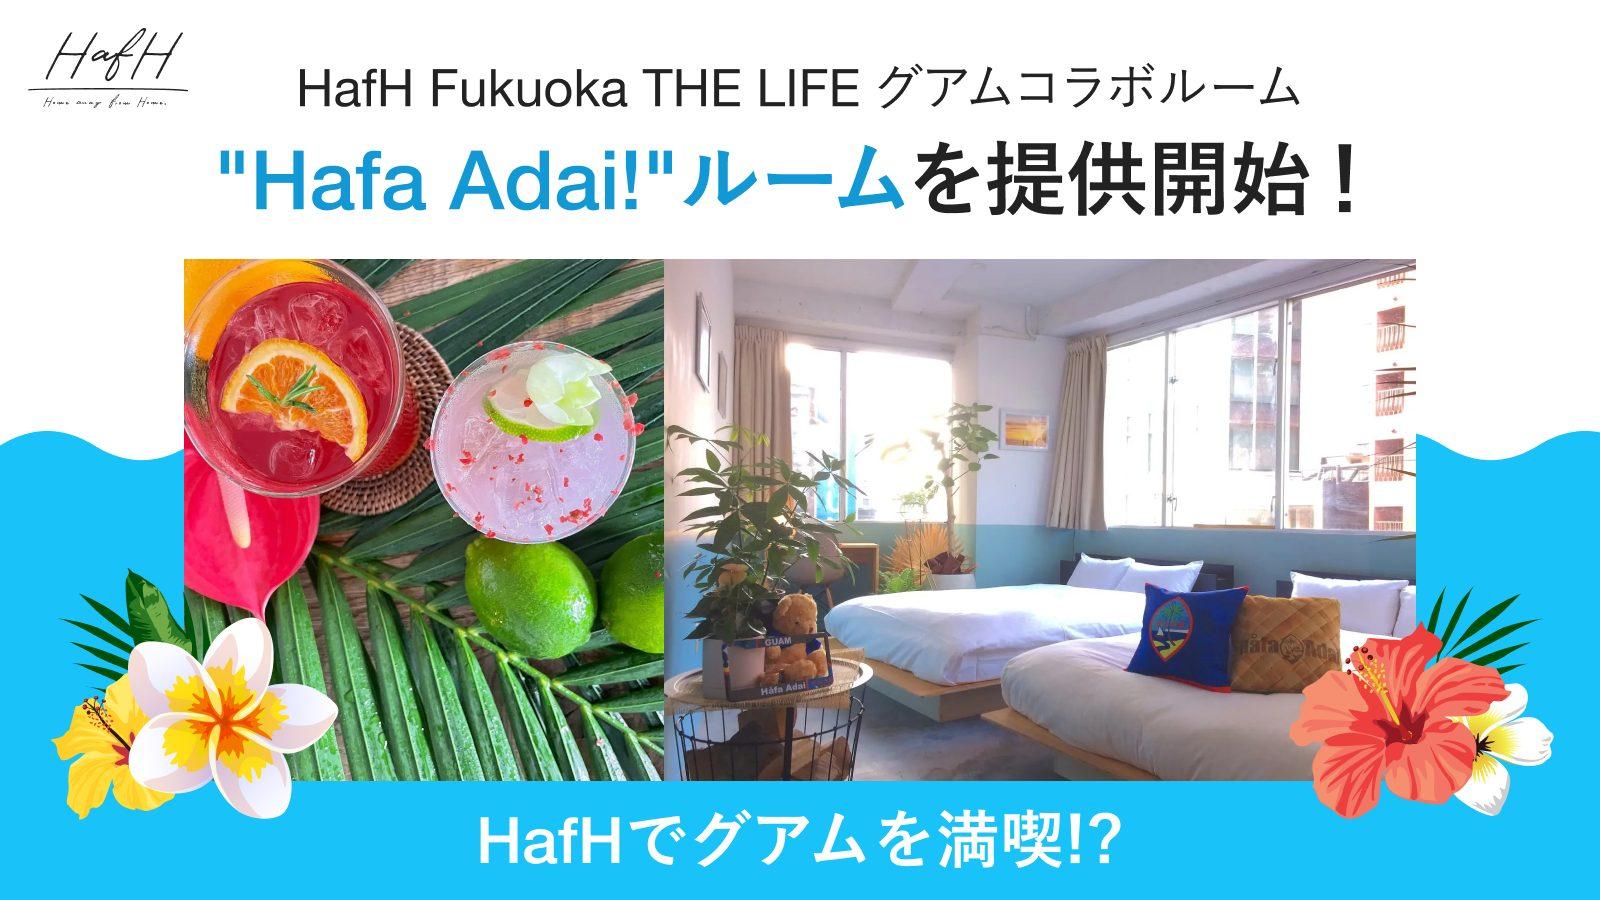 HafH Fukuoka THE LIFE グアム政府観光局コラボルーム&#8221;Hafa Adai!&#8221; ルームを提供開始！